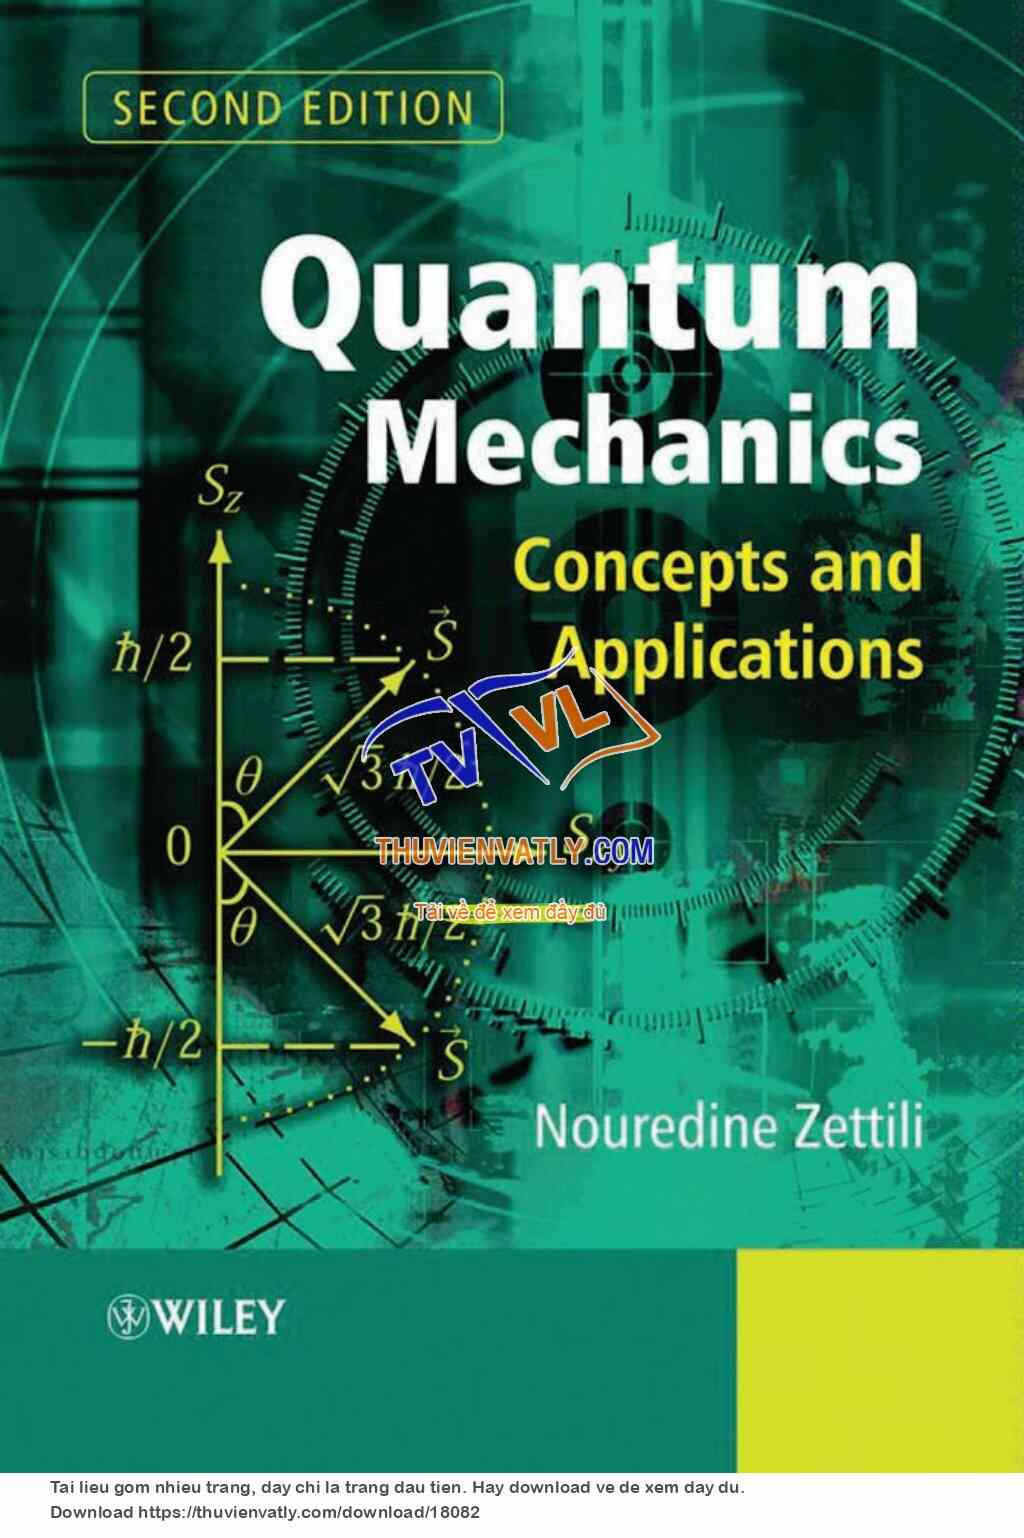 Quantum Mechanics - Concepts and Applications 2nd ed. - N. Zettili (Wiley, 2009)